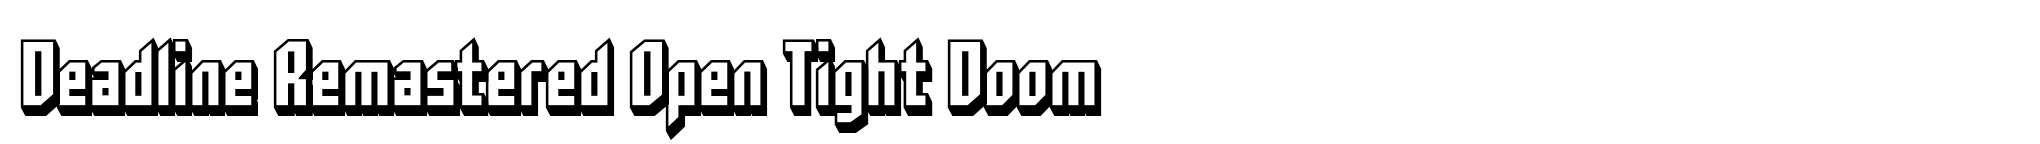 Deadline Remastered Open Tight Doom image